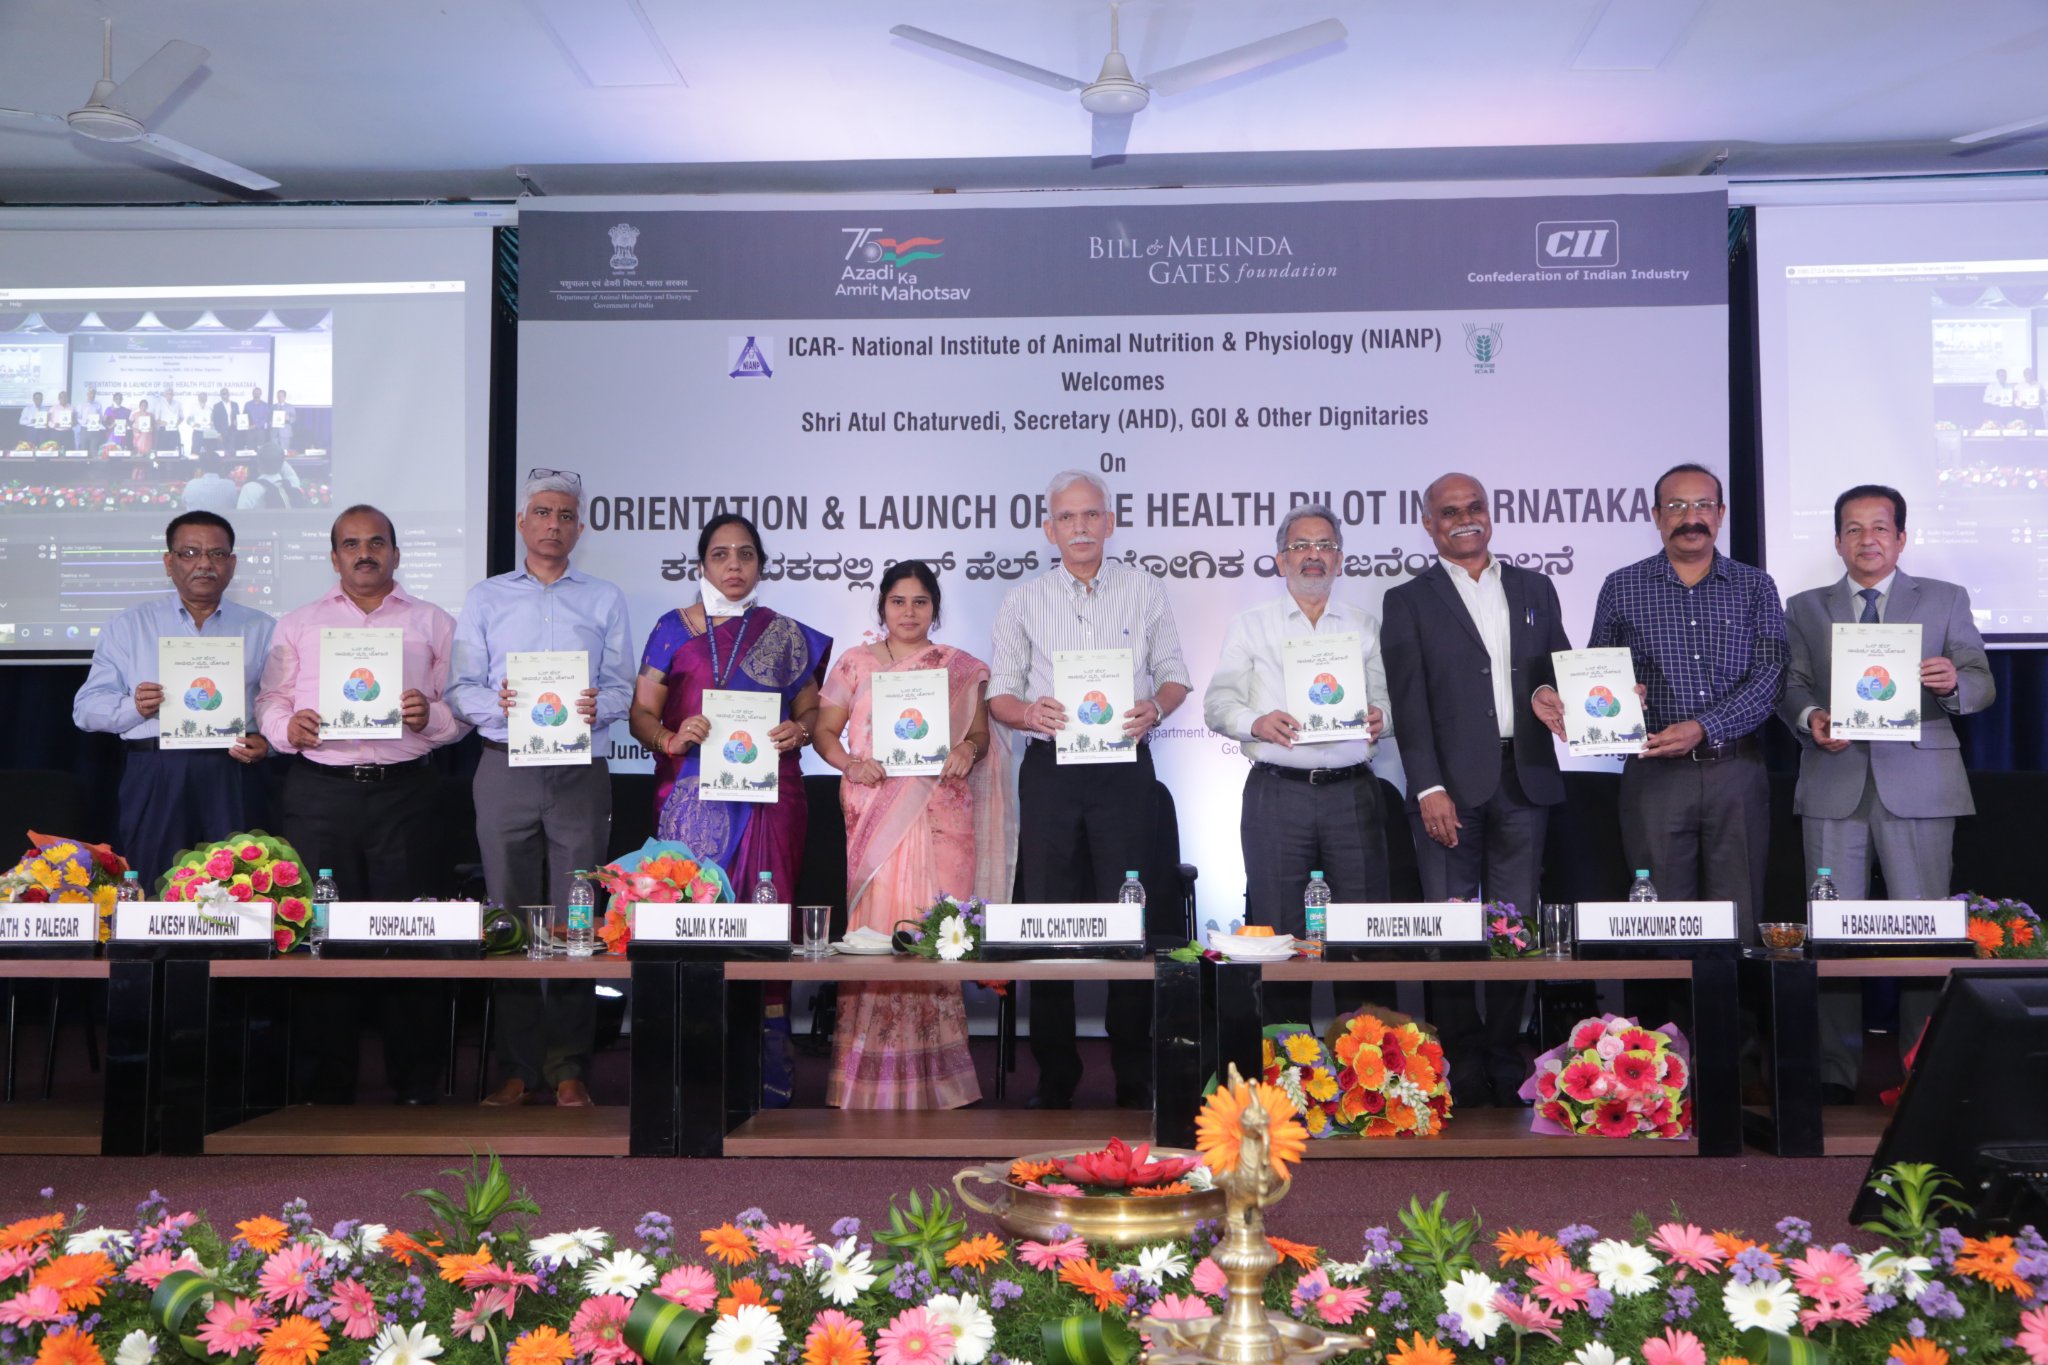 Bengaluru witnessed the launch of ‘Orientation & Launch of One Health Pilot in Karnataka’ by Shri Atul Chaturvedi, Secretary,